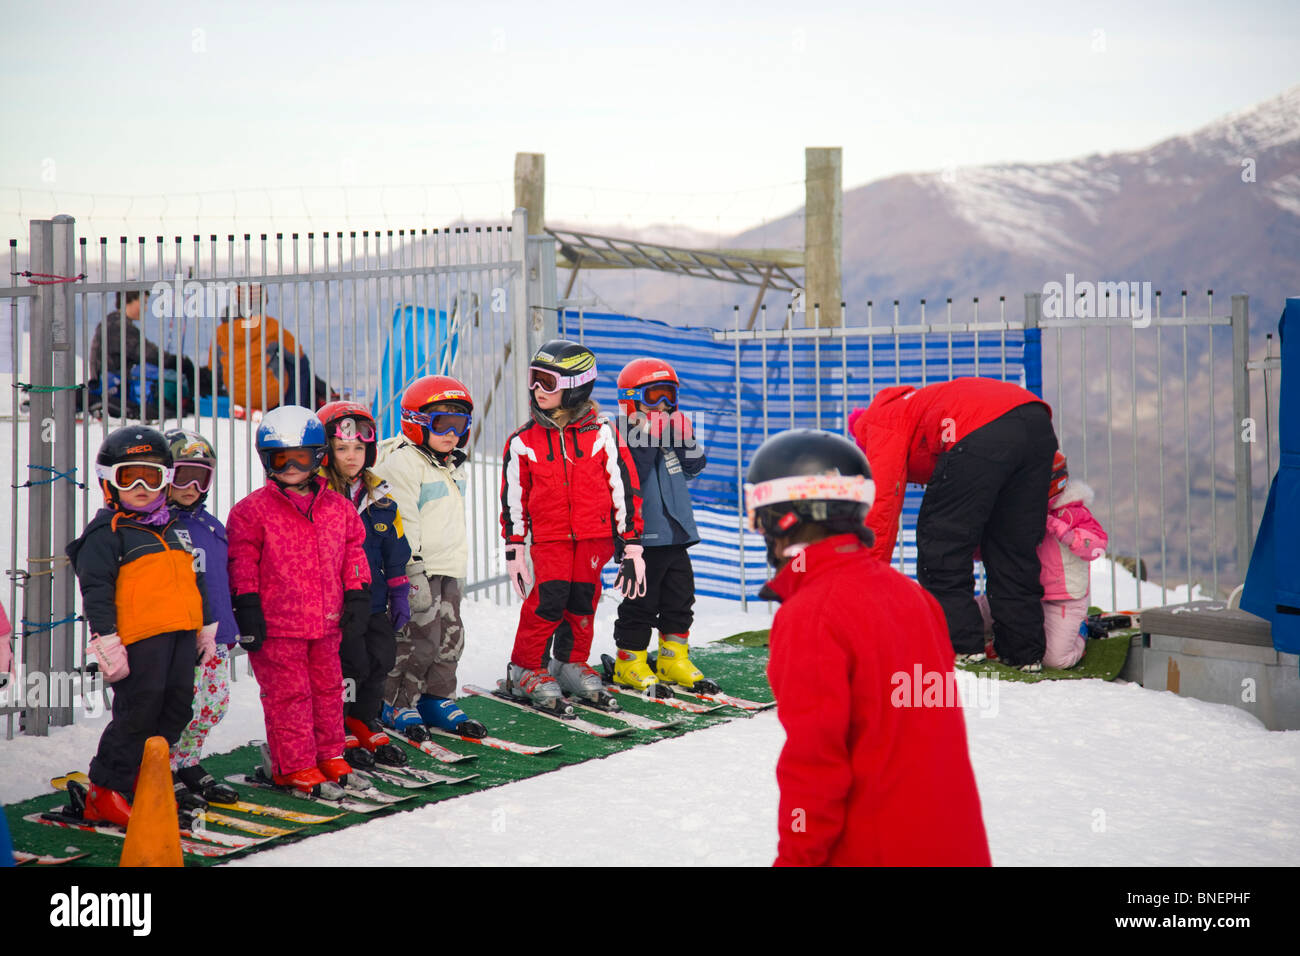 children in their ski club at coronet peak ski resort Stock Photo